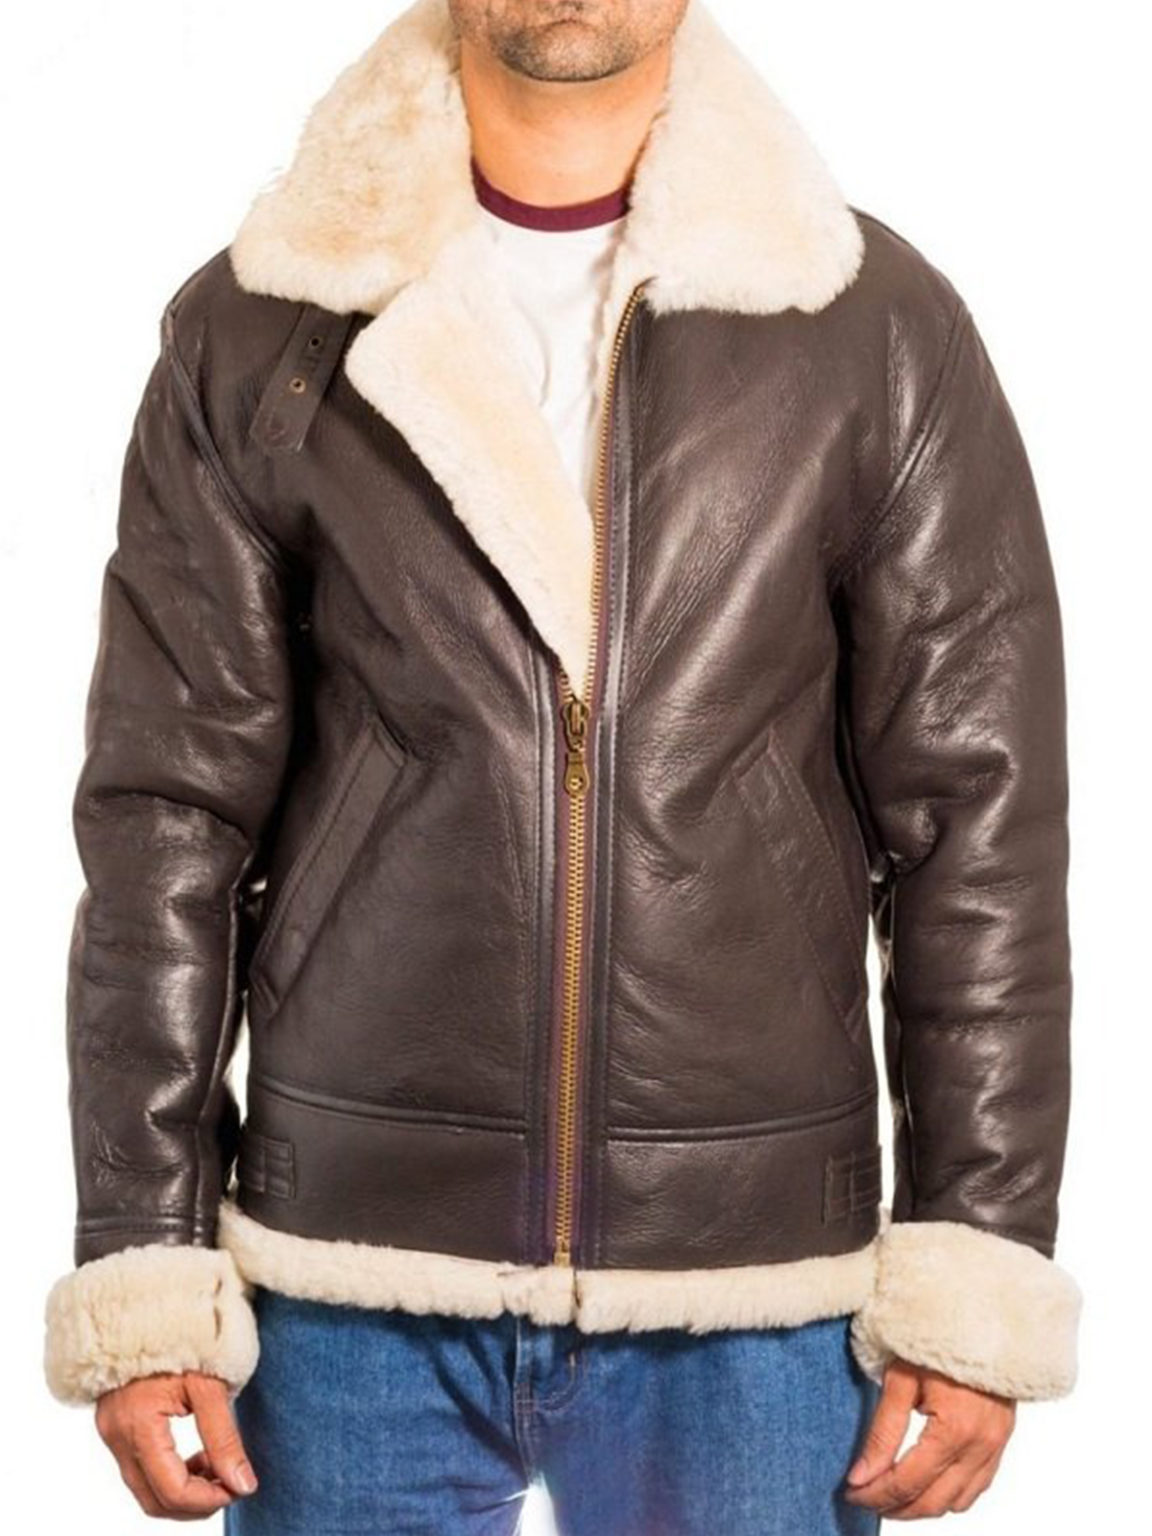 Michael B Jordan Shearling Leather Jacket - Stars Jackets